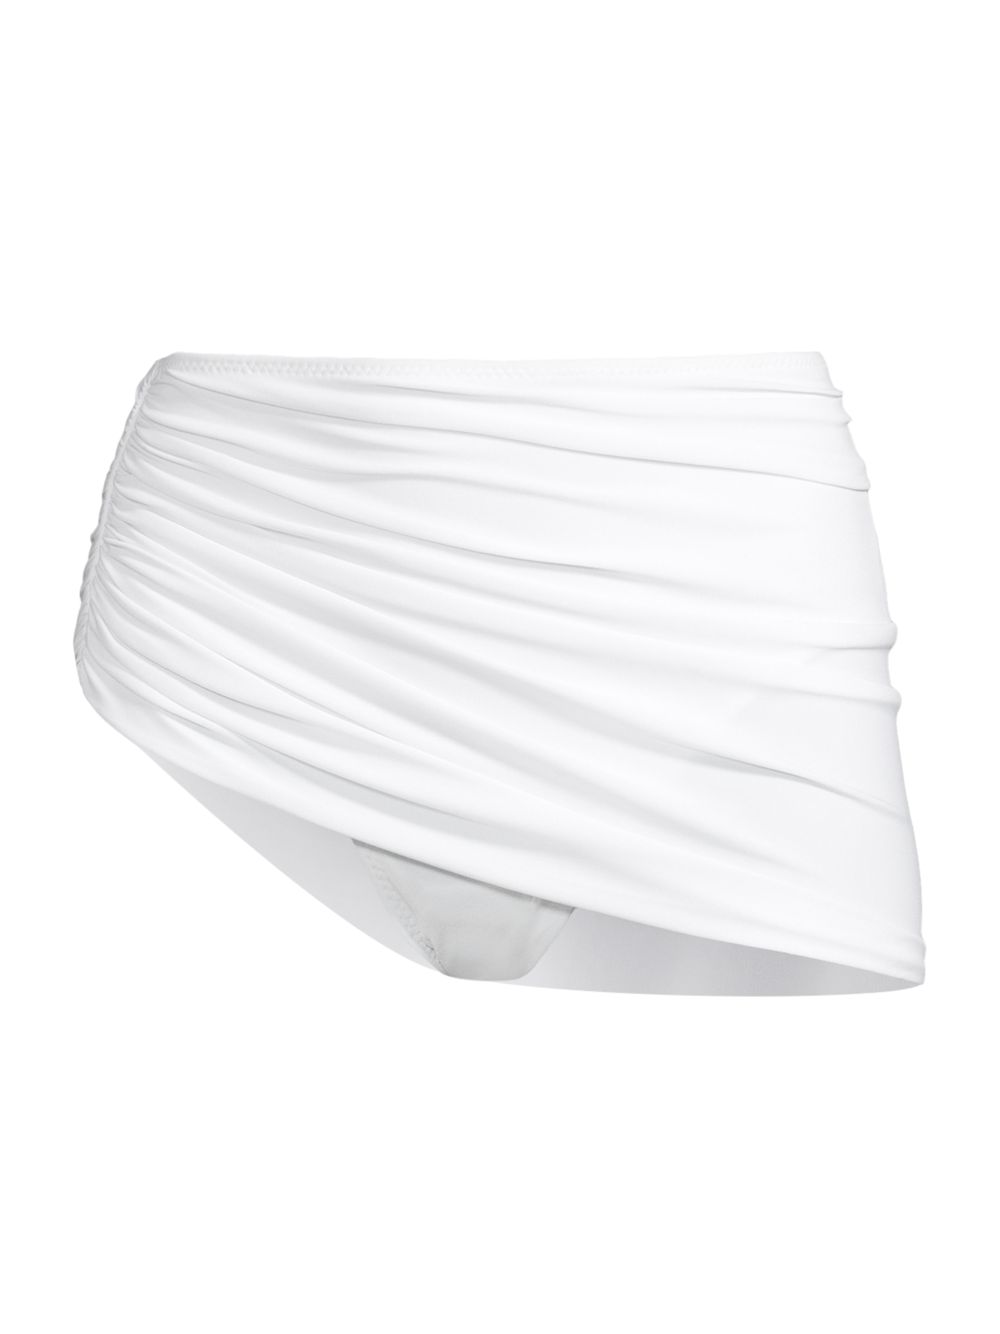 Асимметричные плавки бикини Diana Norma Kamali, белый асимметричные плавки бикини diana norma kamali белый